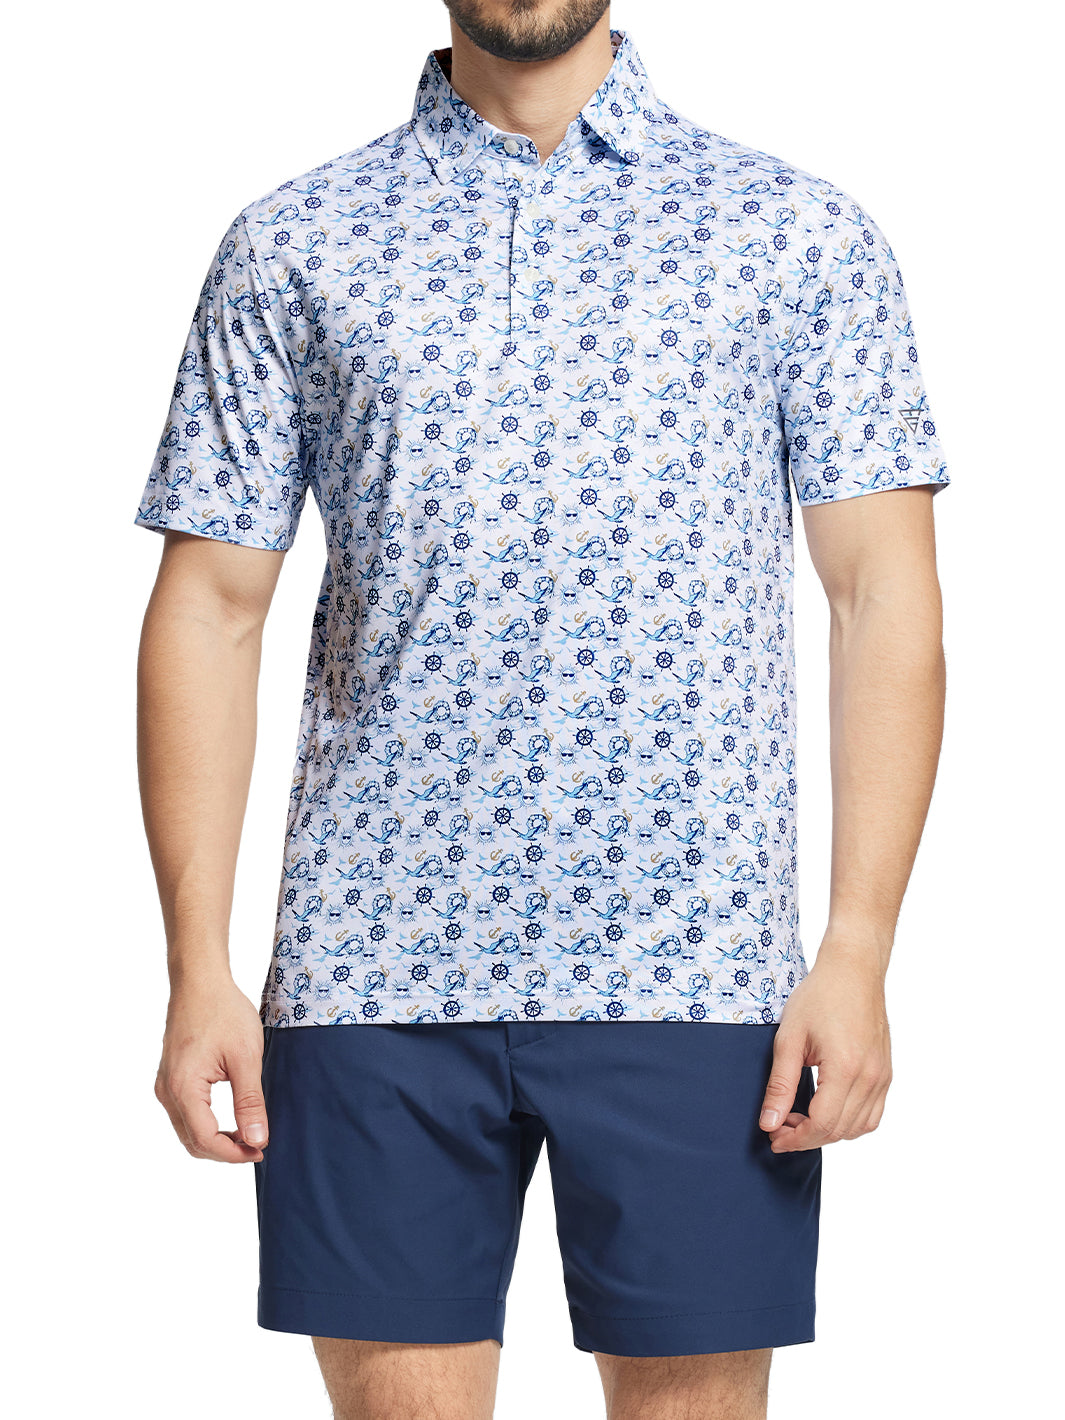 Men's Printed Golf Shirts-Caribbean